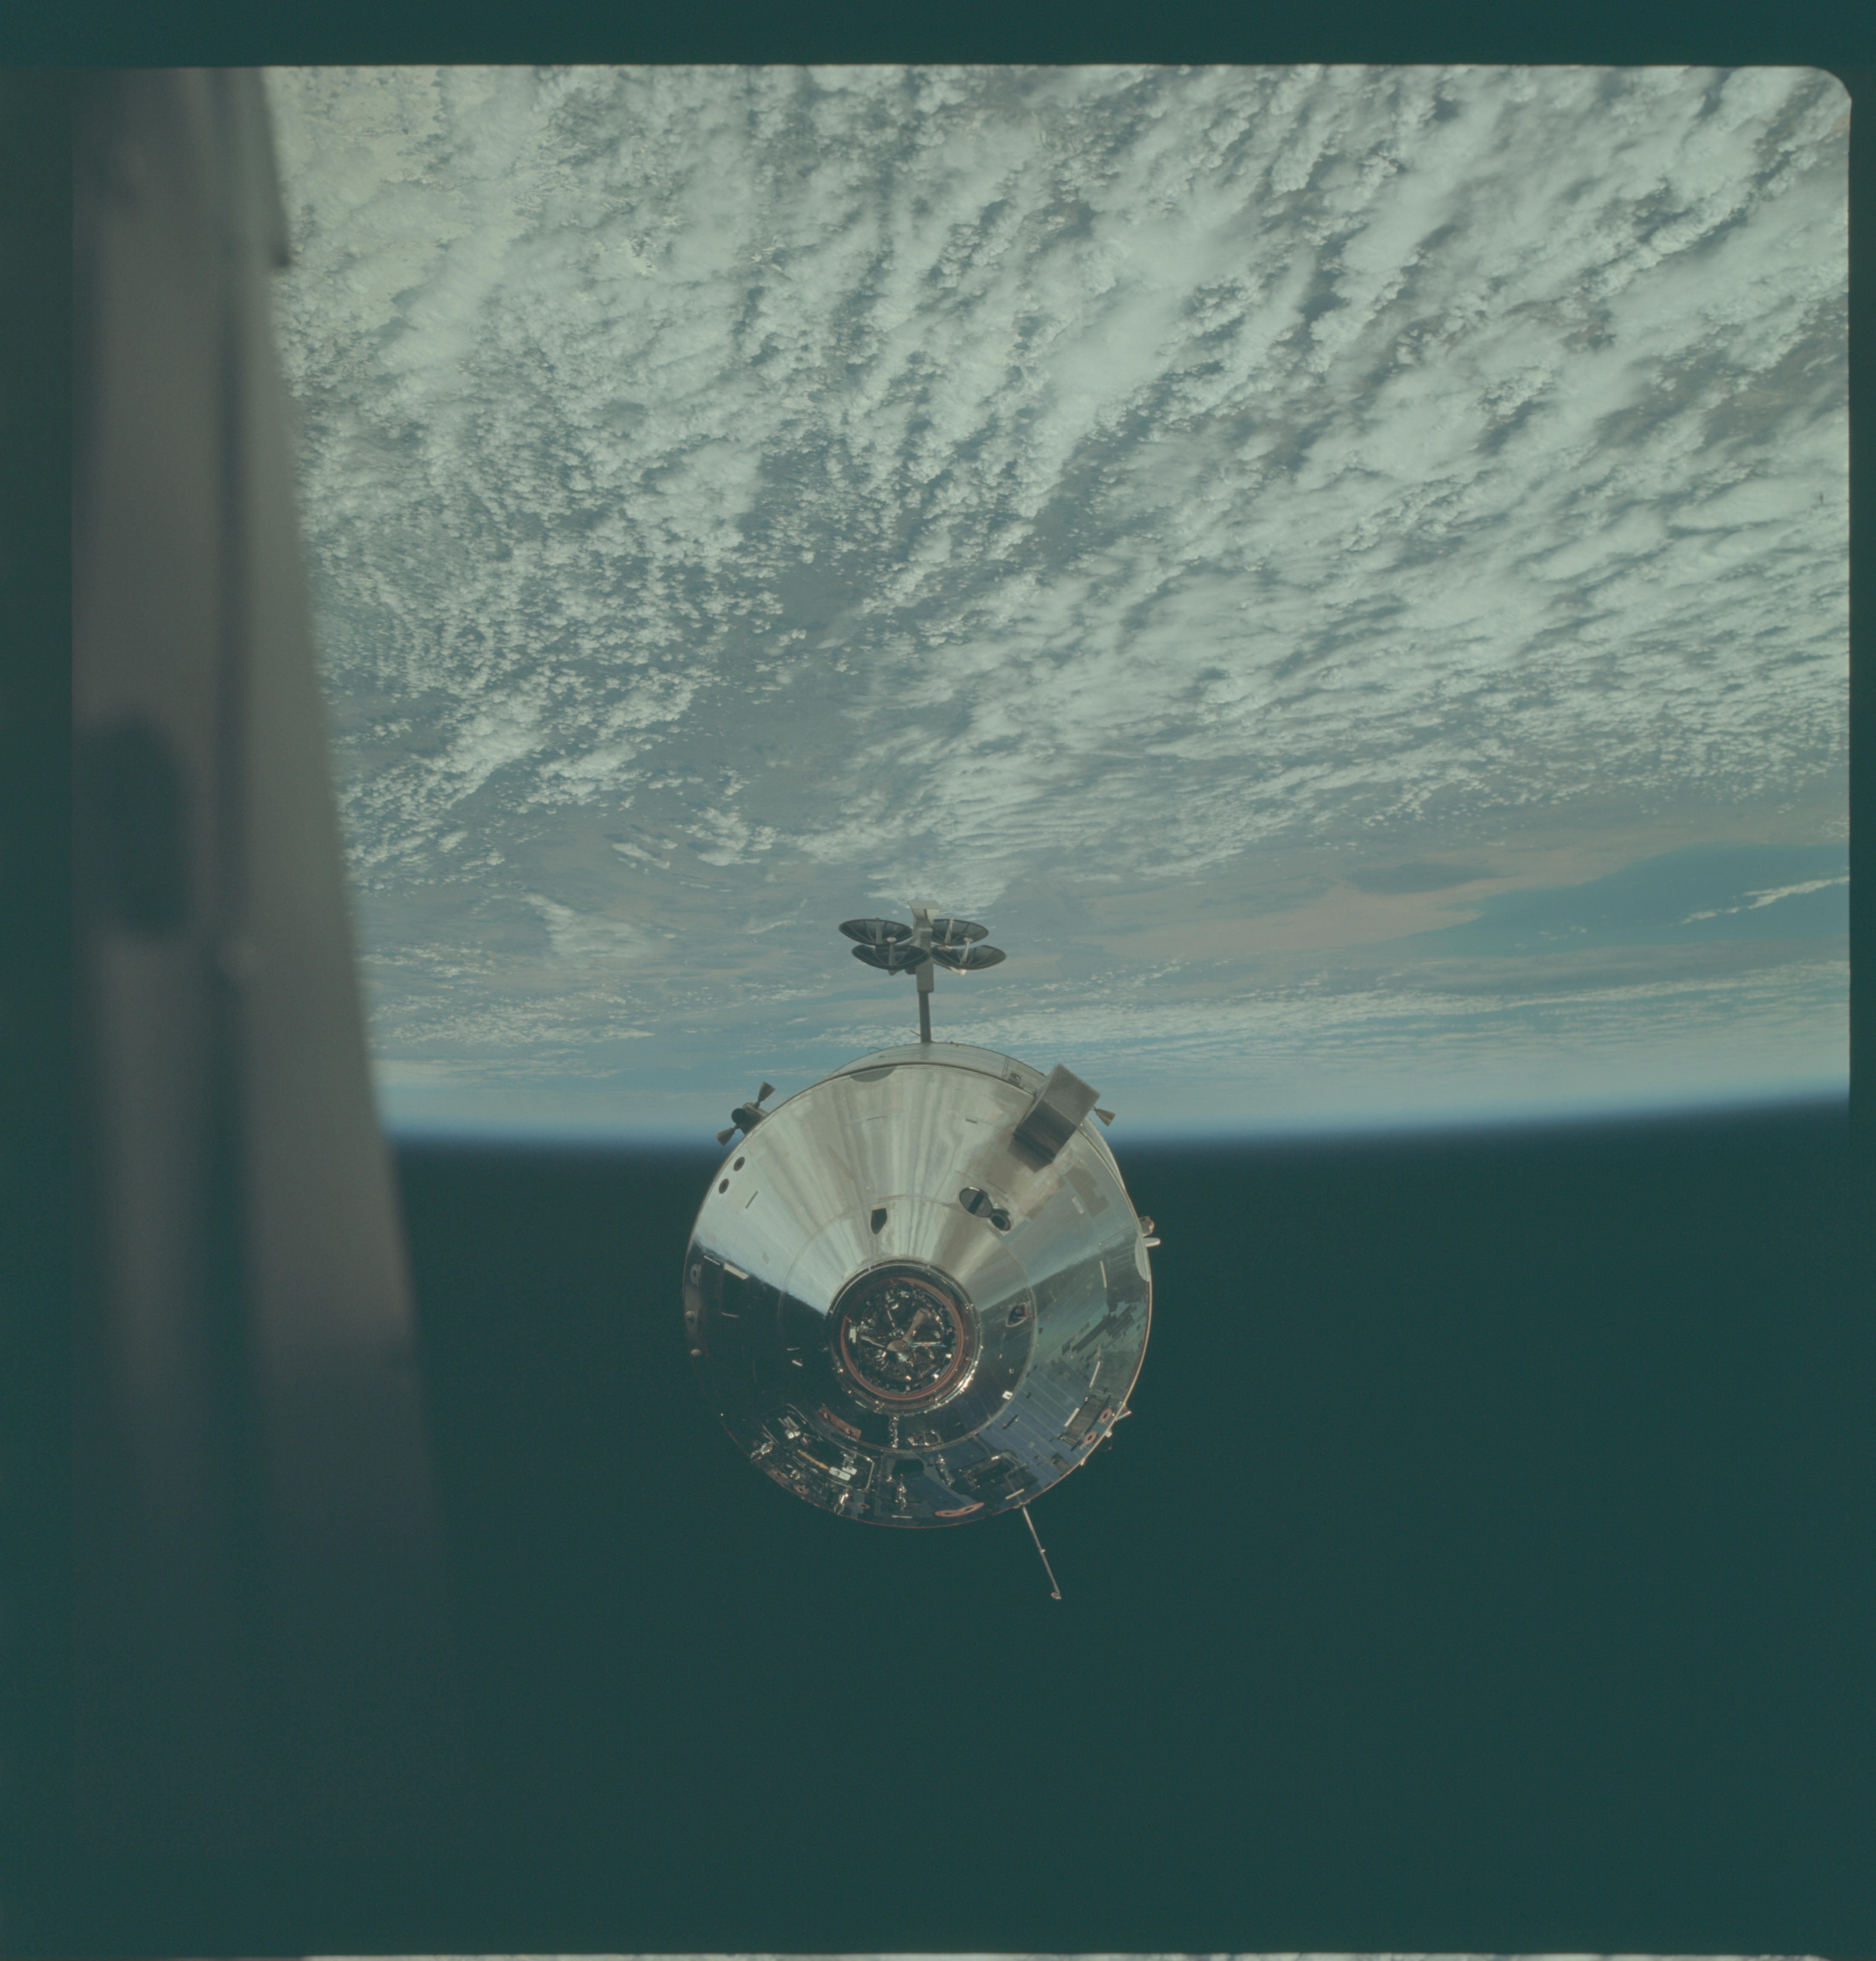 Apollo Moon Landing Photo Archive Goes Online